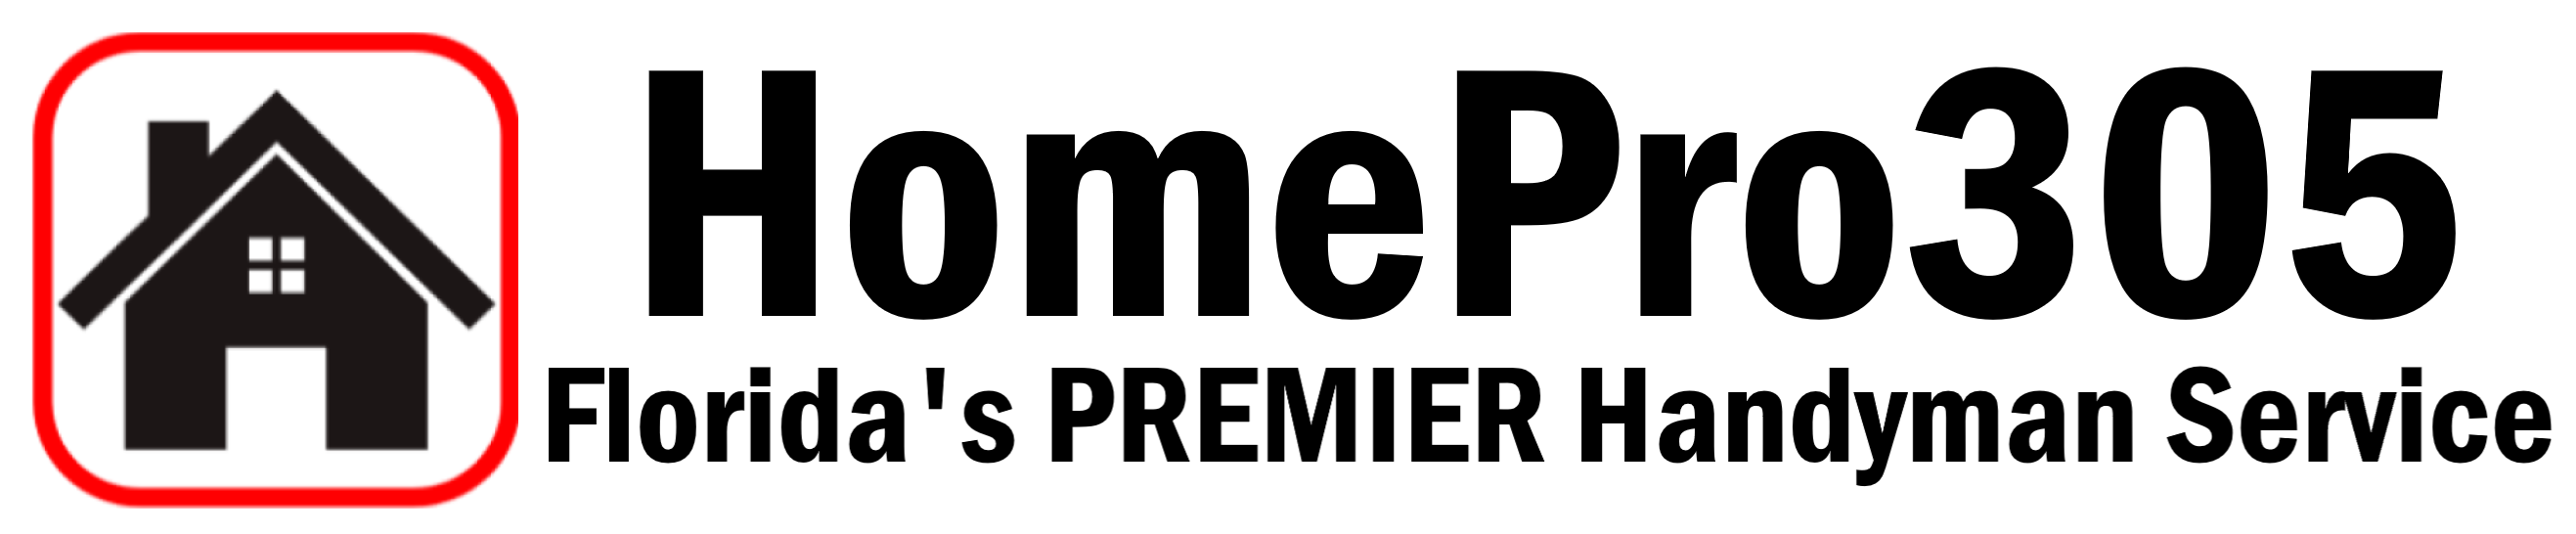 Home Pro 305 Logo